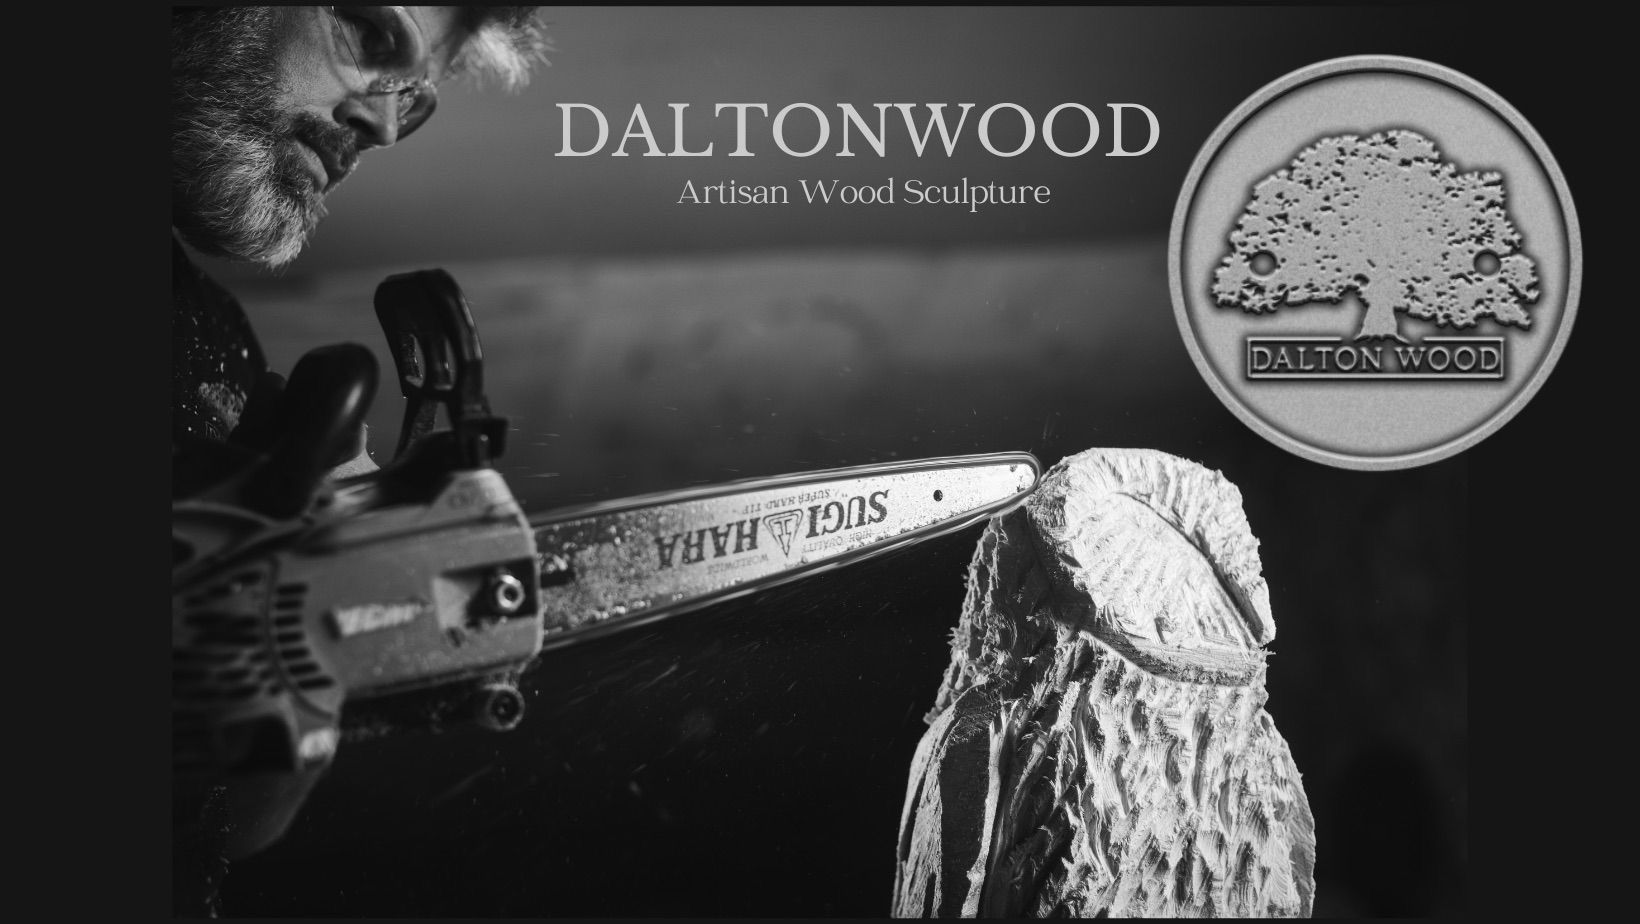 Daltonwood